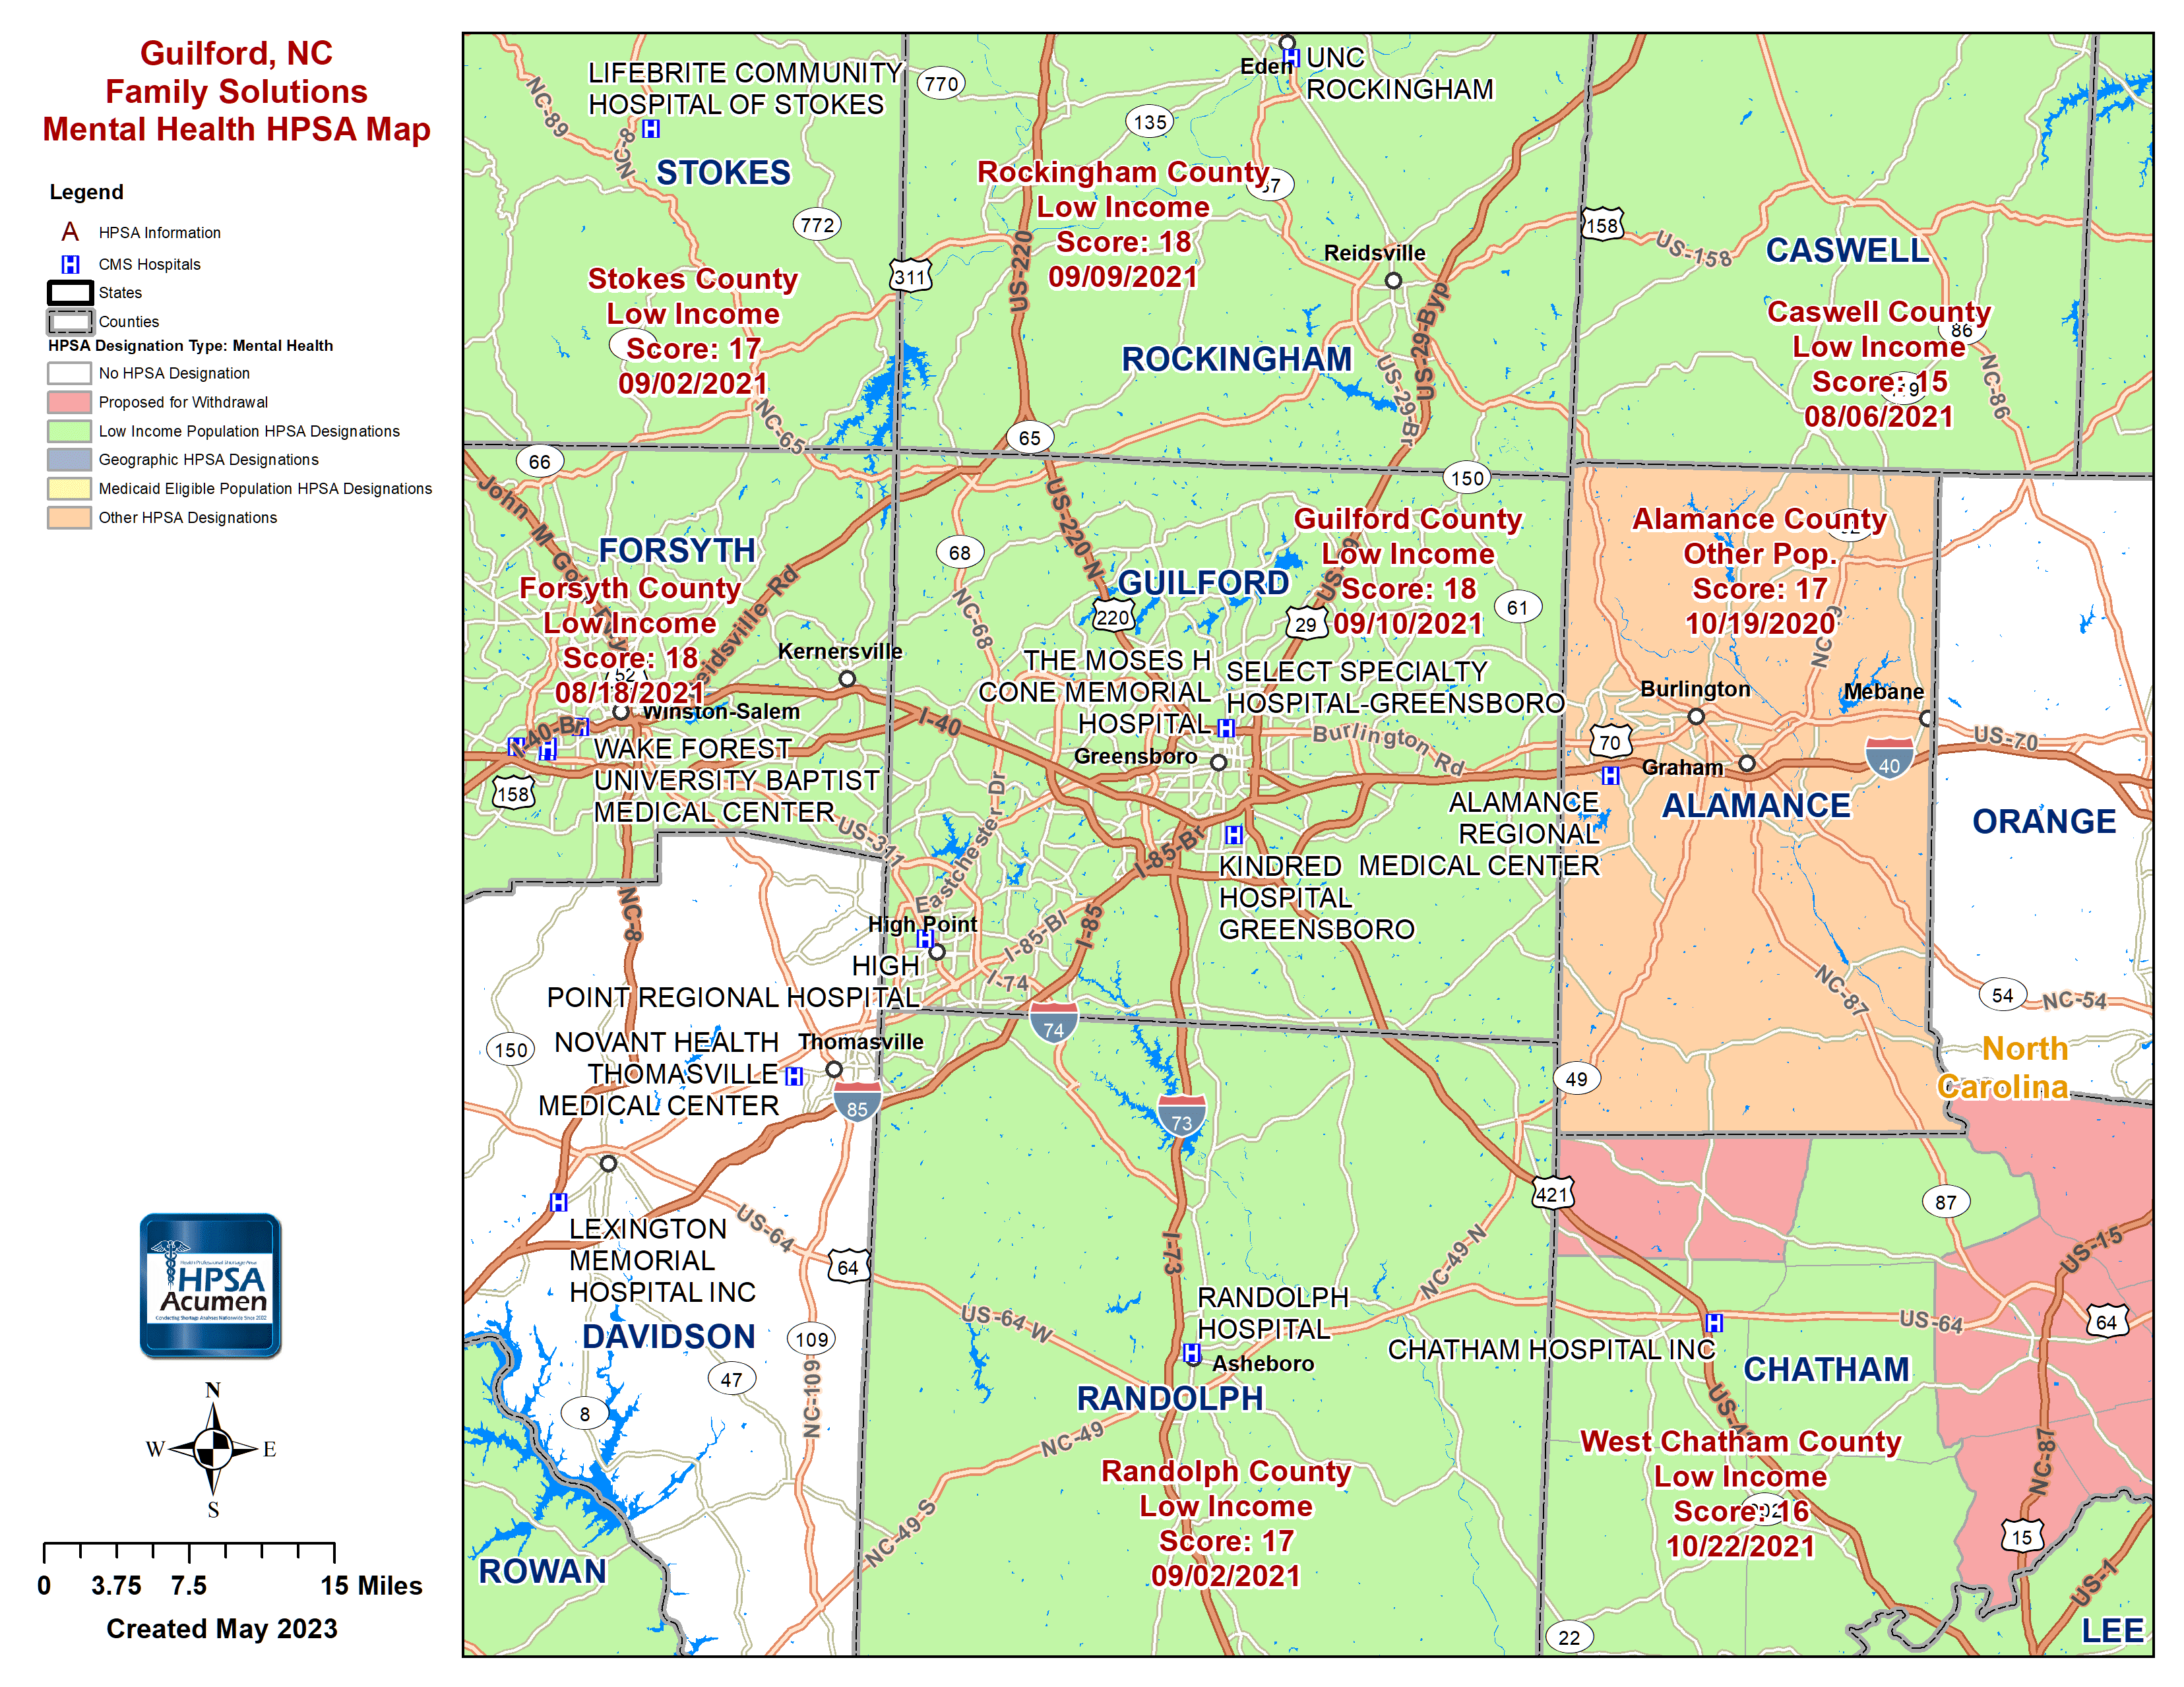 Guilford, NC MH HPSA Map